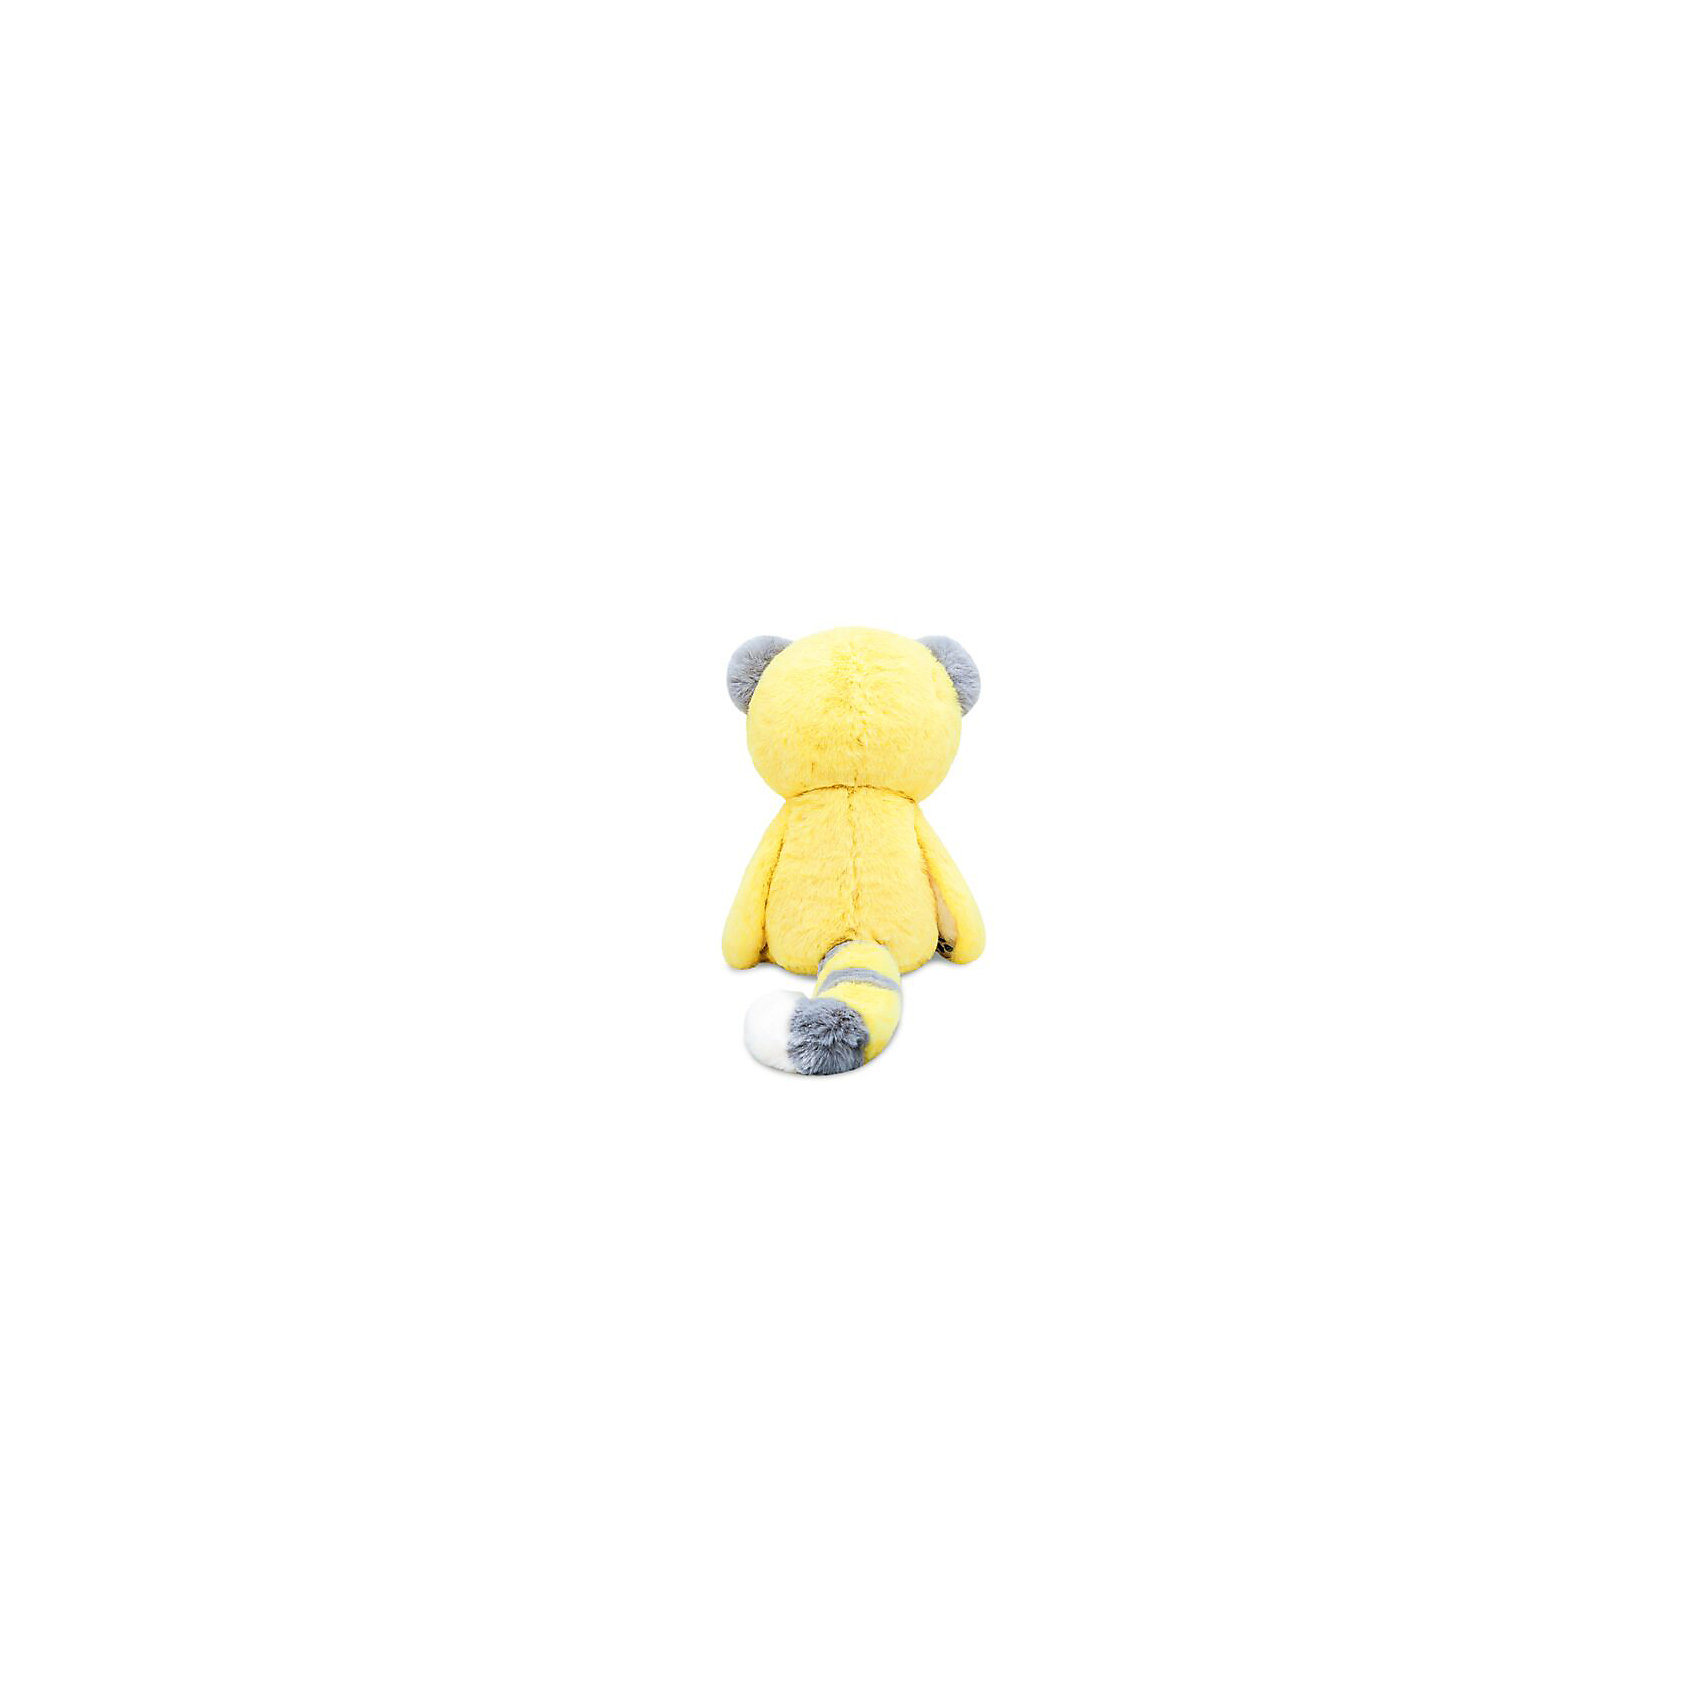 фото Мягкая игрушка Budi Basa Lori Colori Эйка (Eika), жёлтый, 30 см